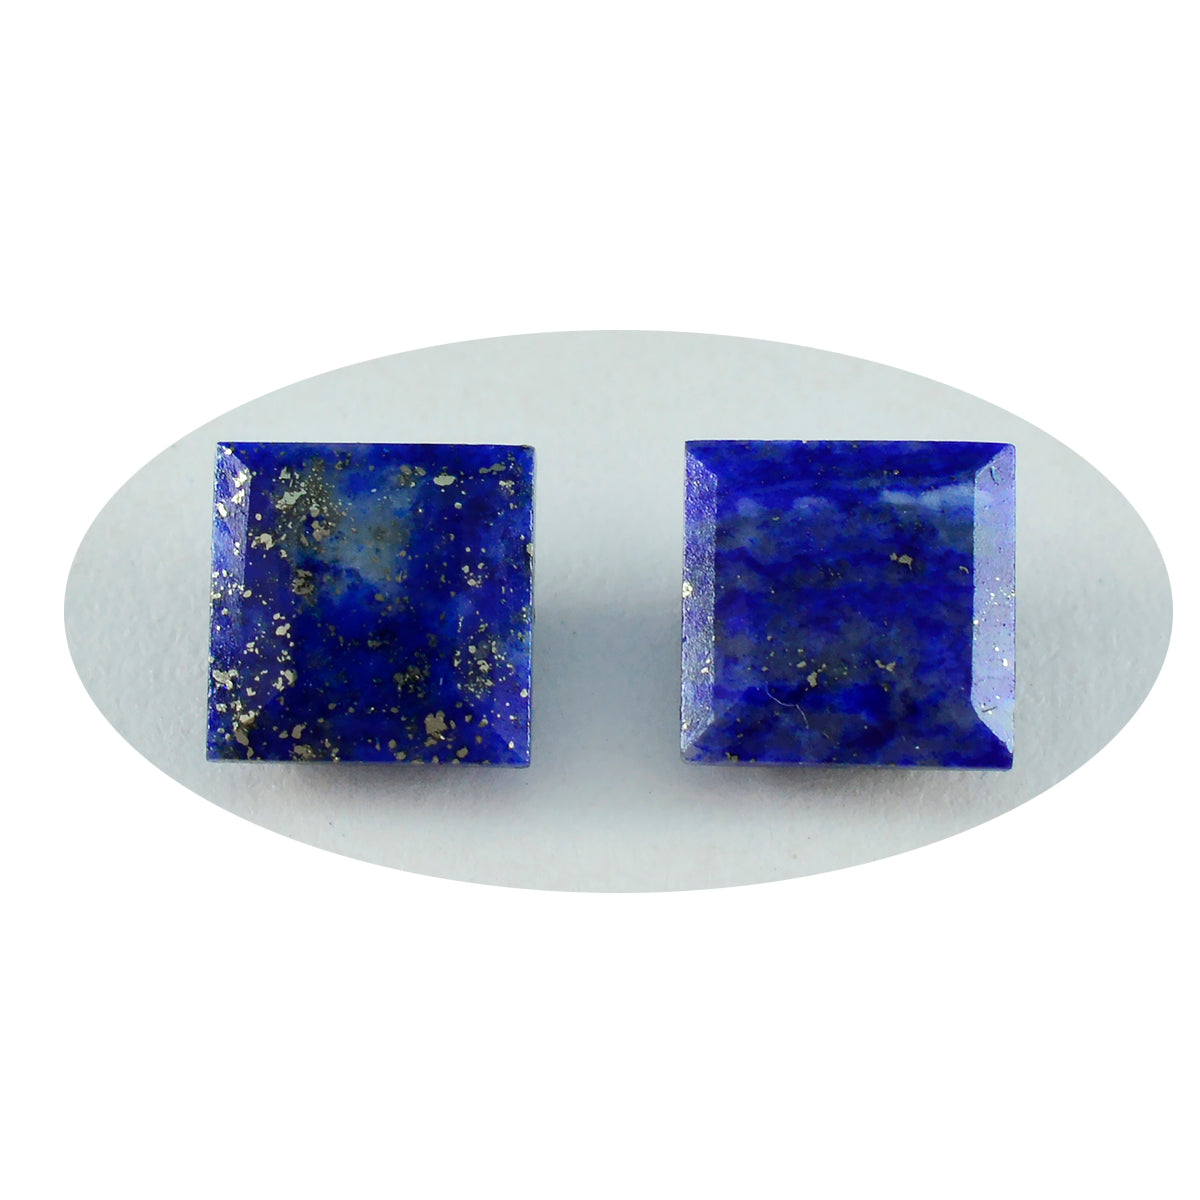 Riyogems 1PC Natural Blue Lapis Lazuli Faceted 11x11 mm Square Shape handsome Quality Loose Gems